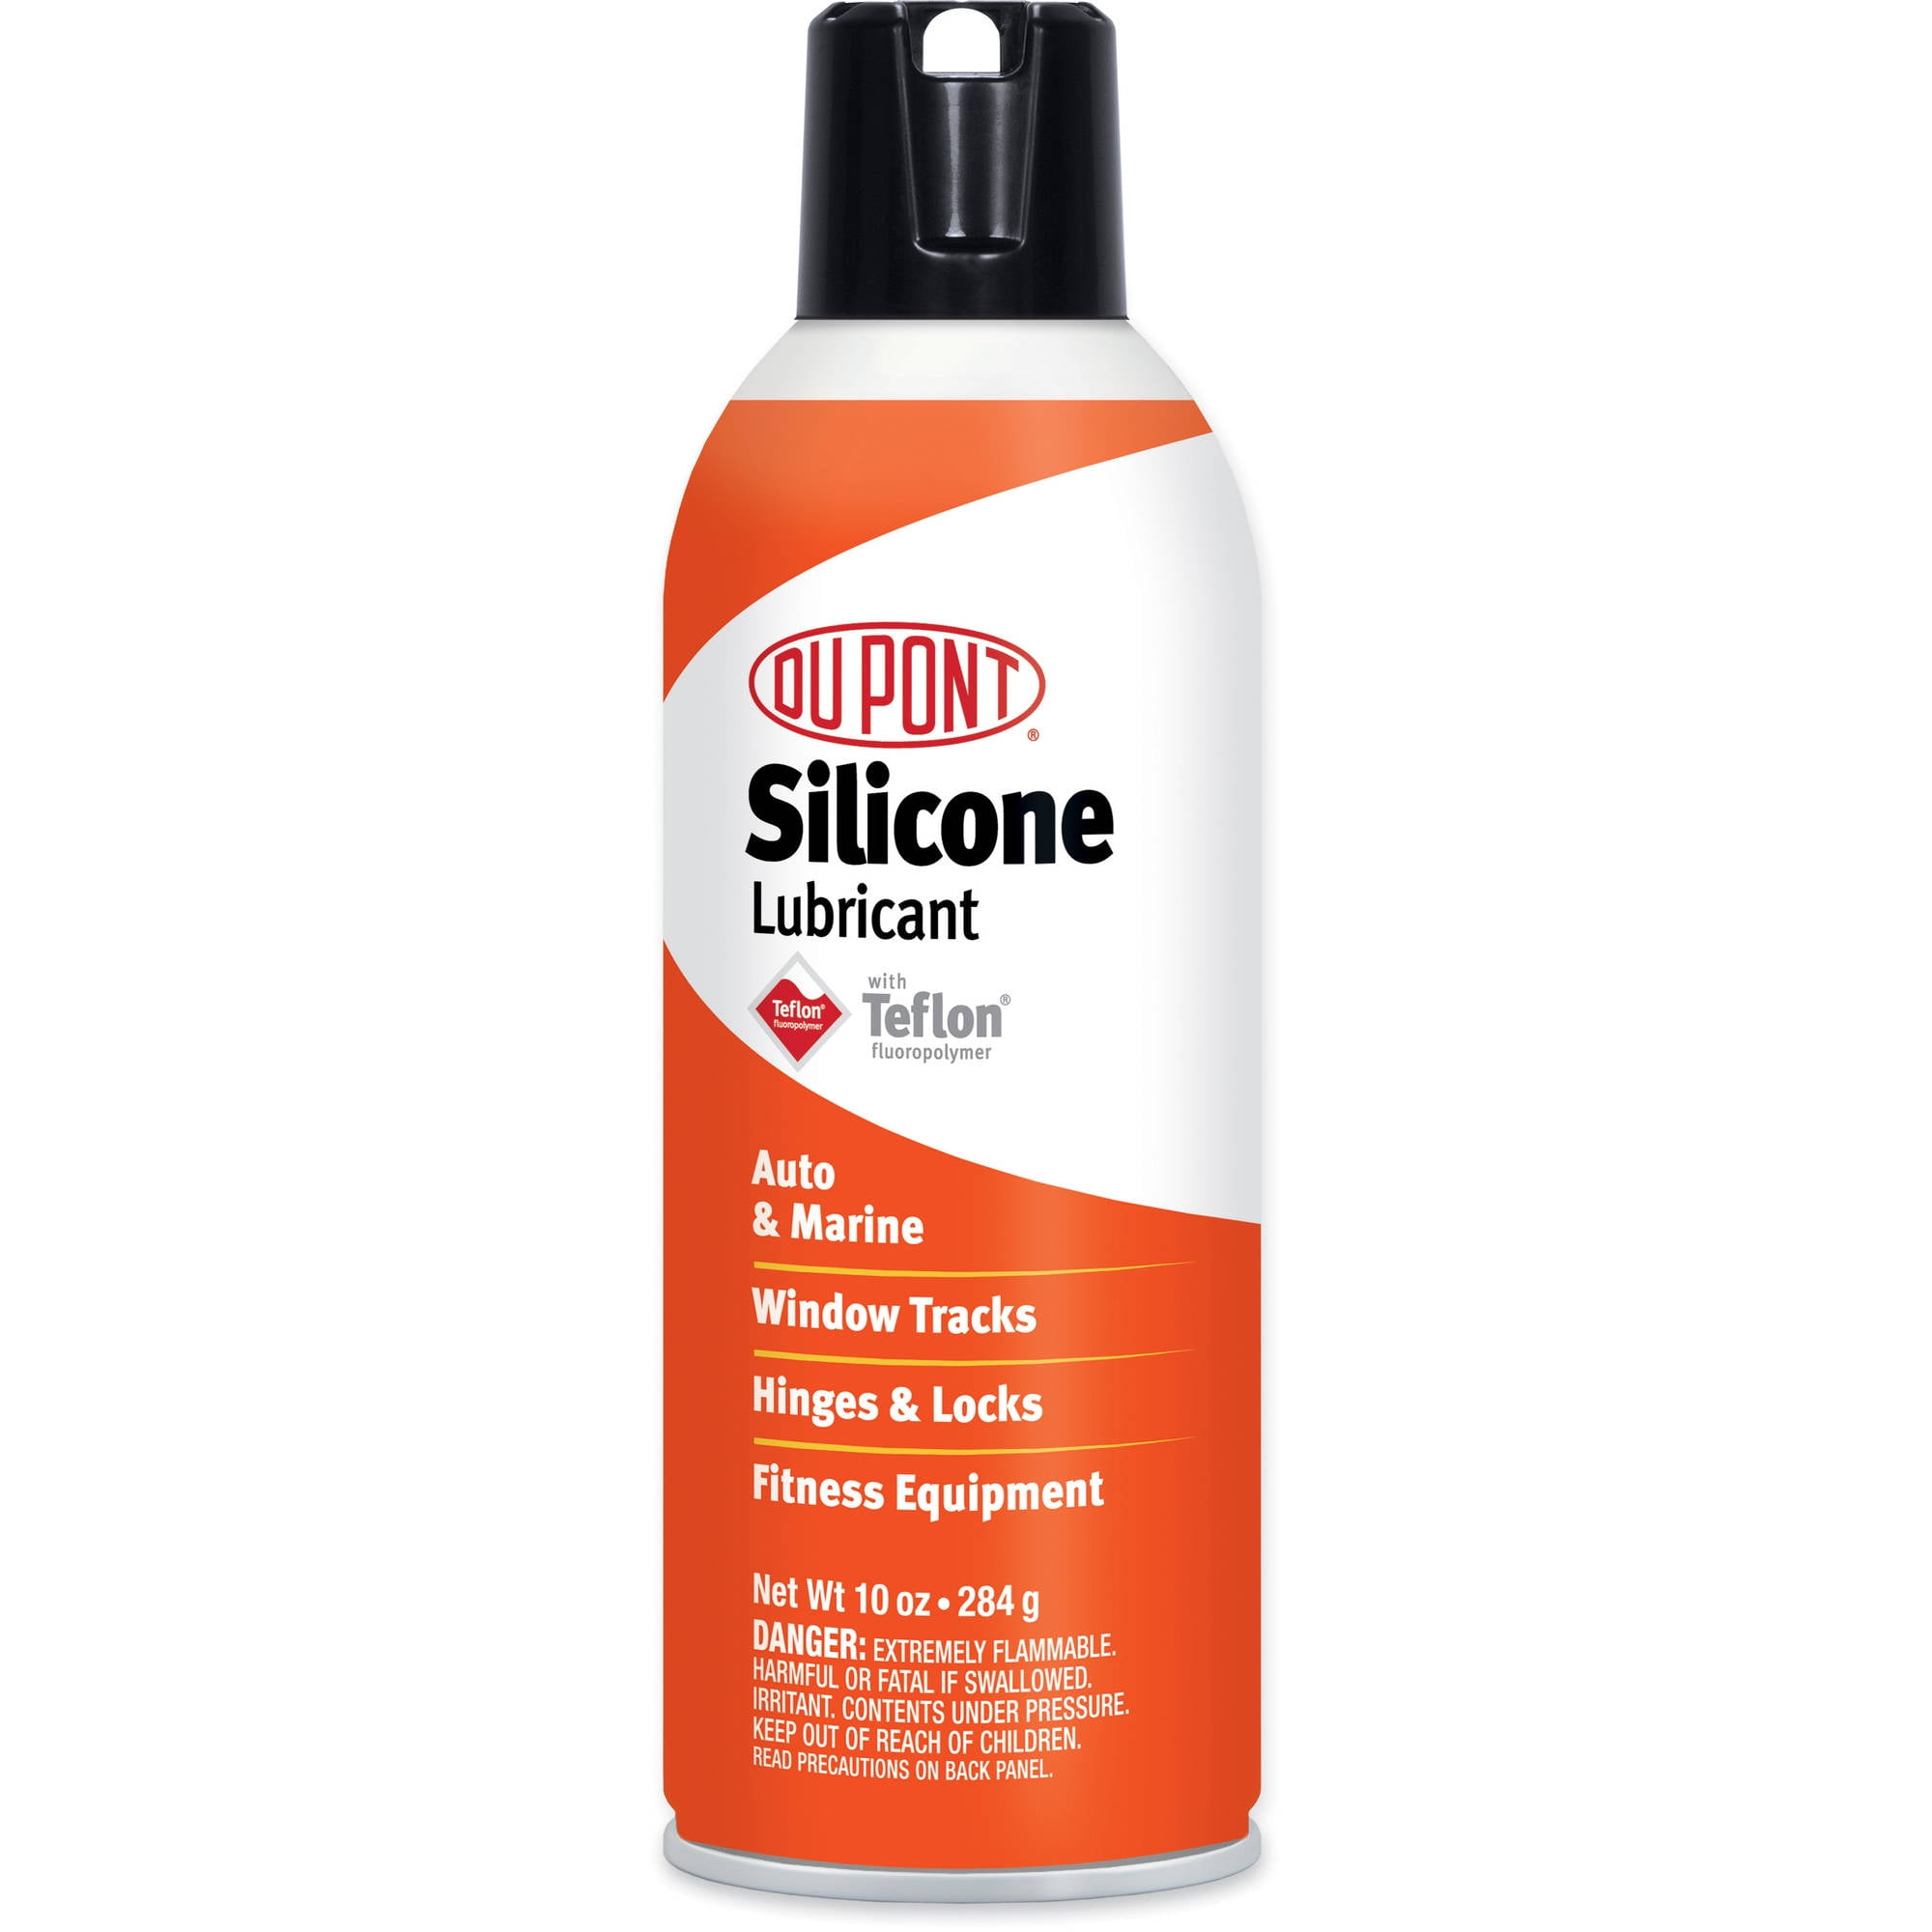 Silicone LUBRICANT W/ Cerflon PTFE Aerosol Spray DIELECTRIC